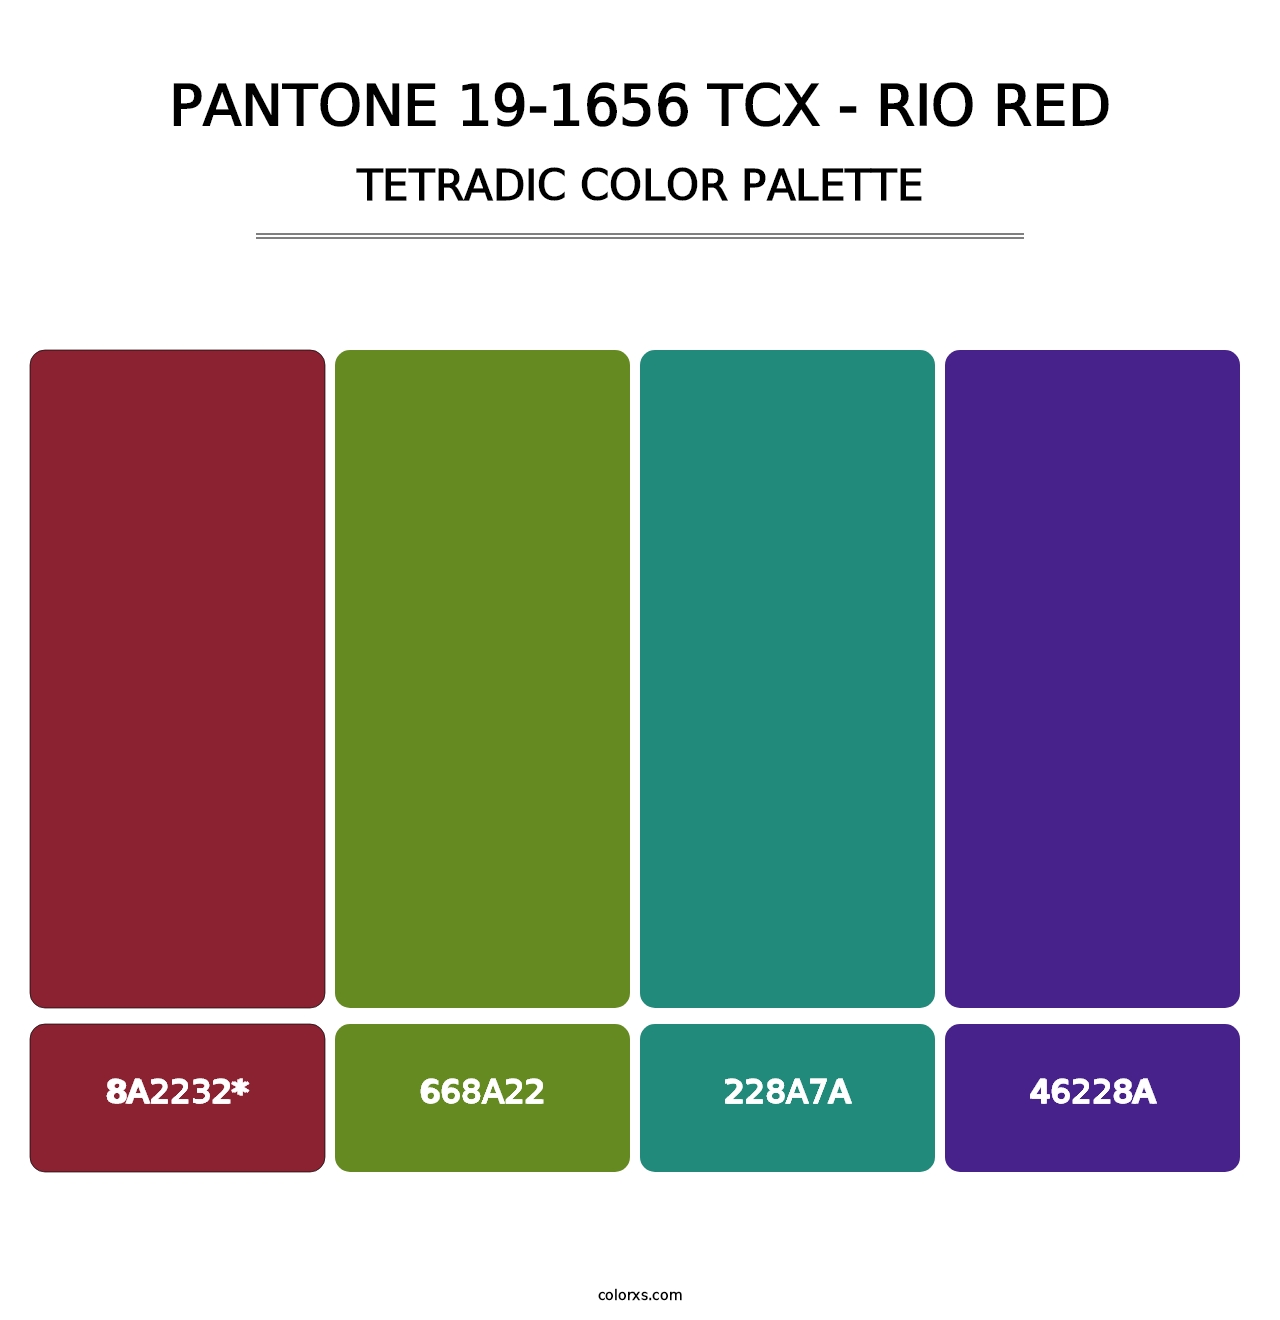 PANTONE 19-1656 TCX - Rio Red - Tetradic Color Palette